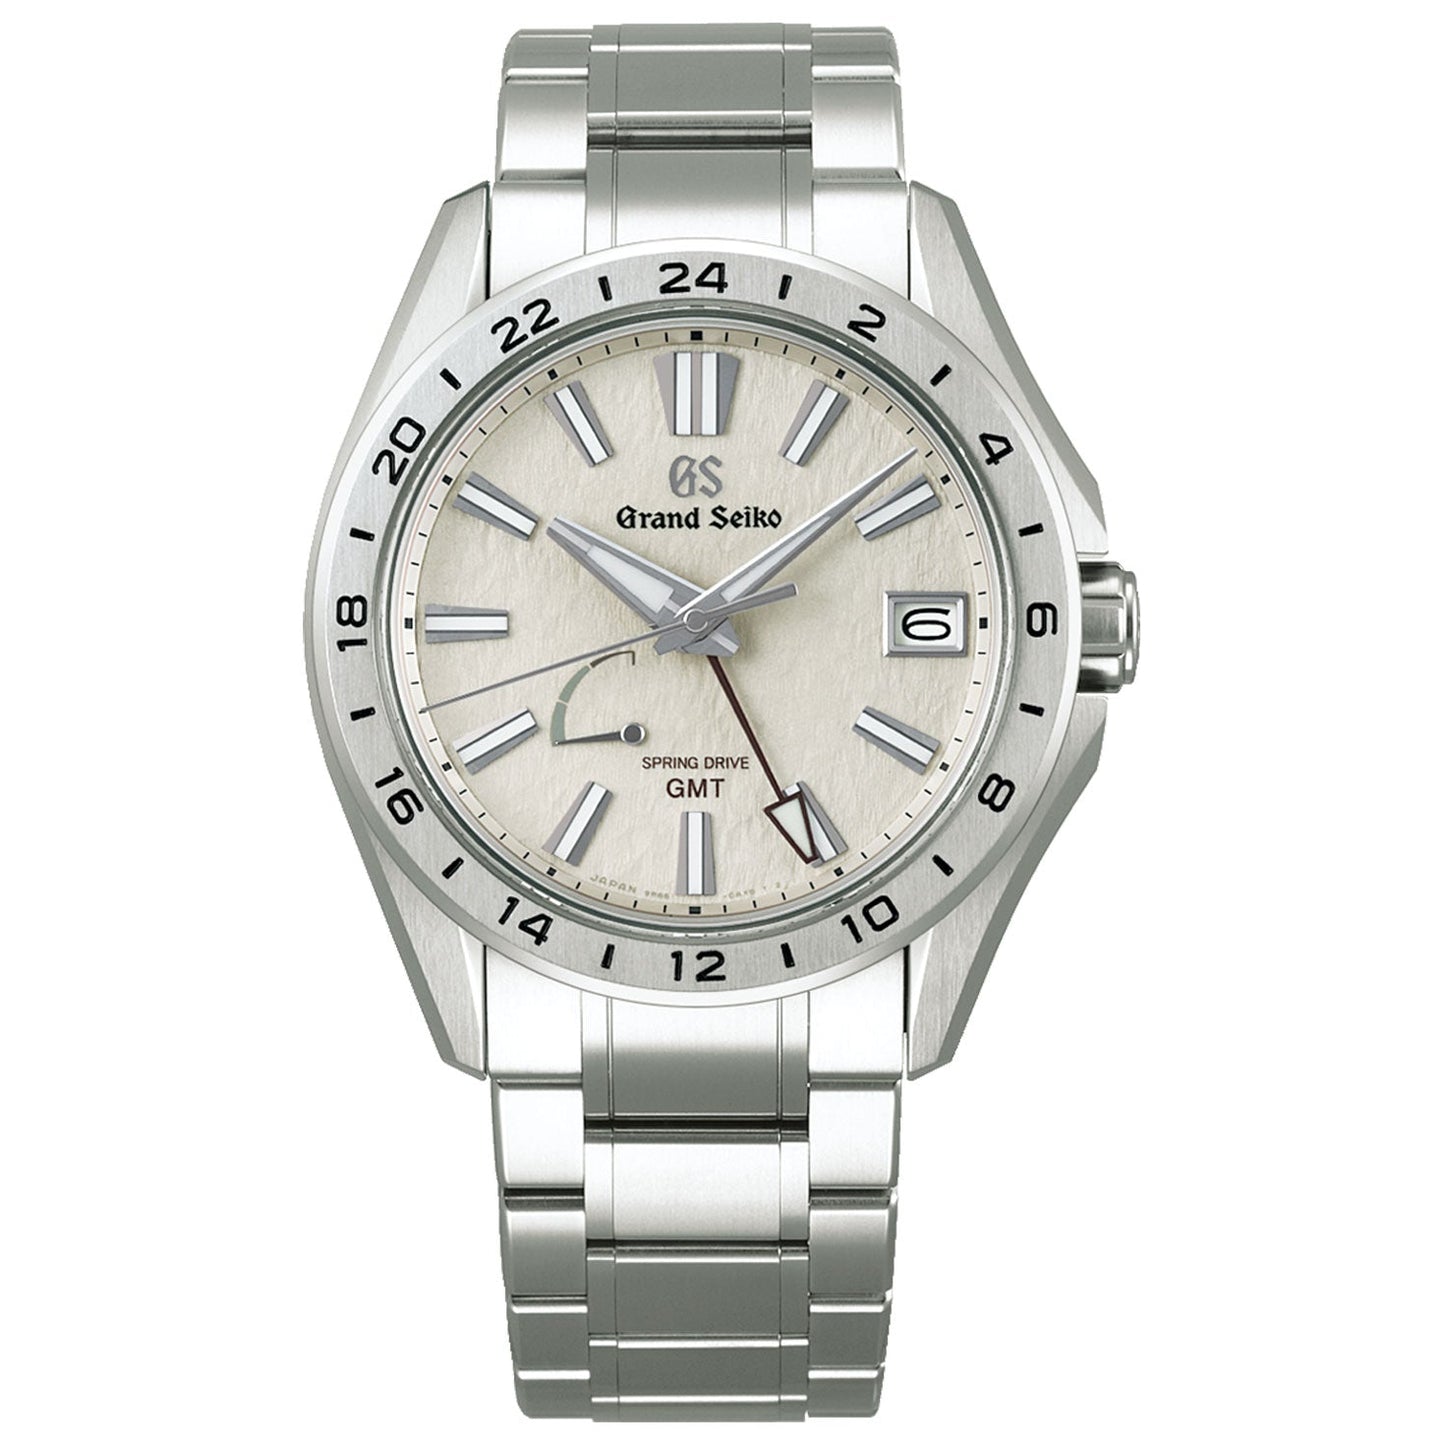 Grand Seiko Evolution 9 Collection High-Intensity Titanium Spring Drive GMT 41mm Watch